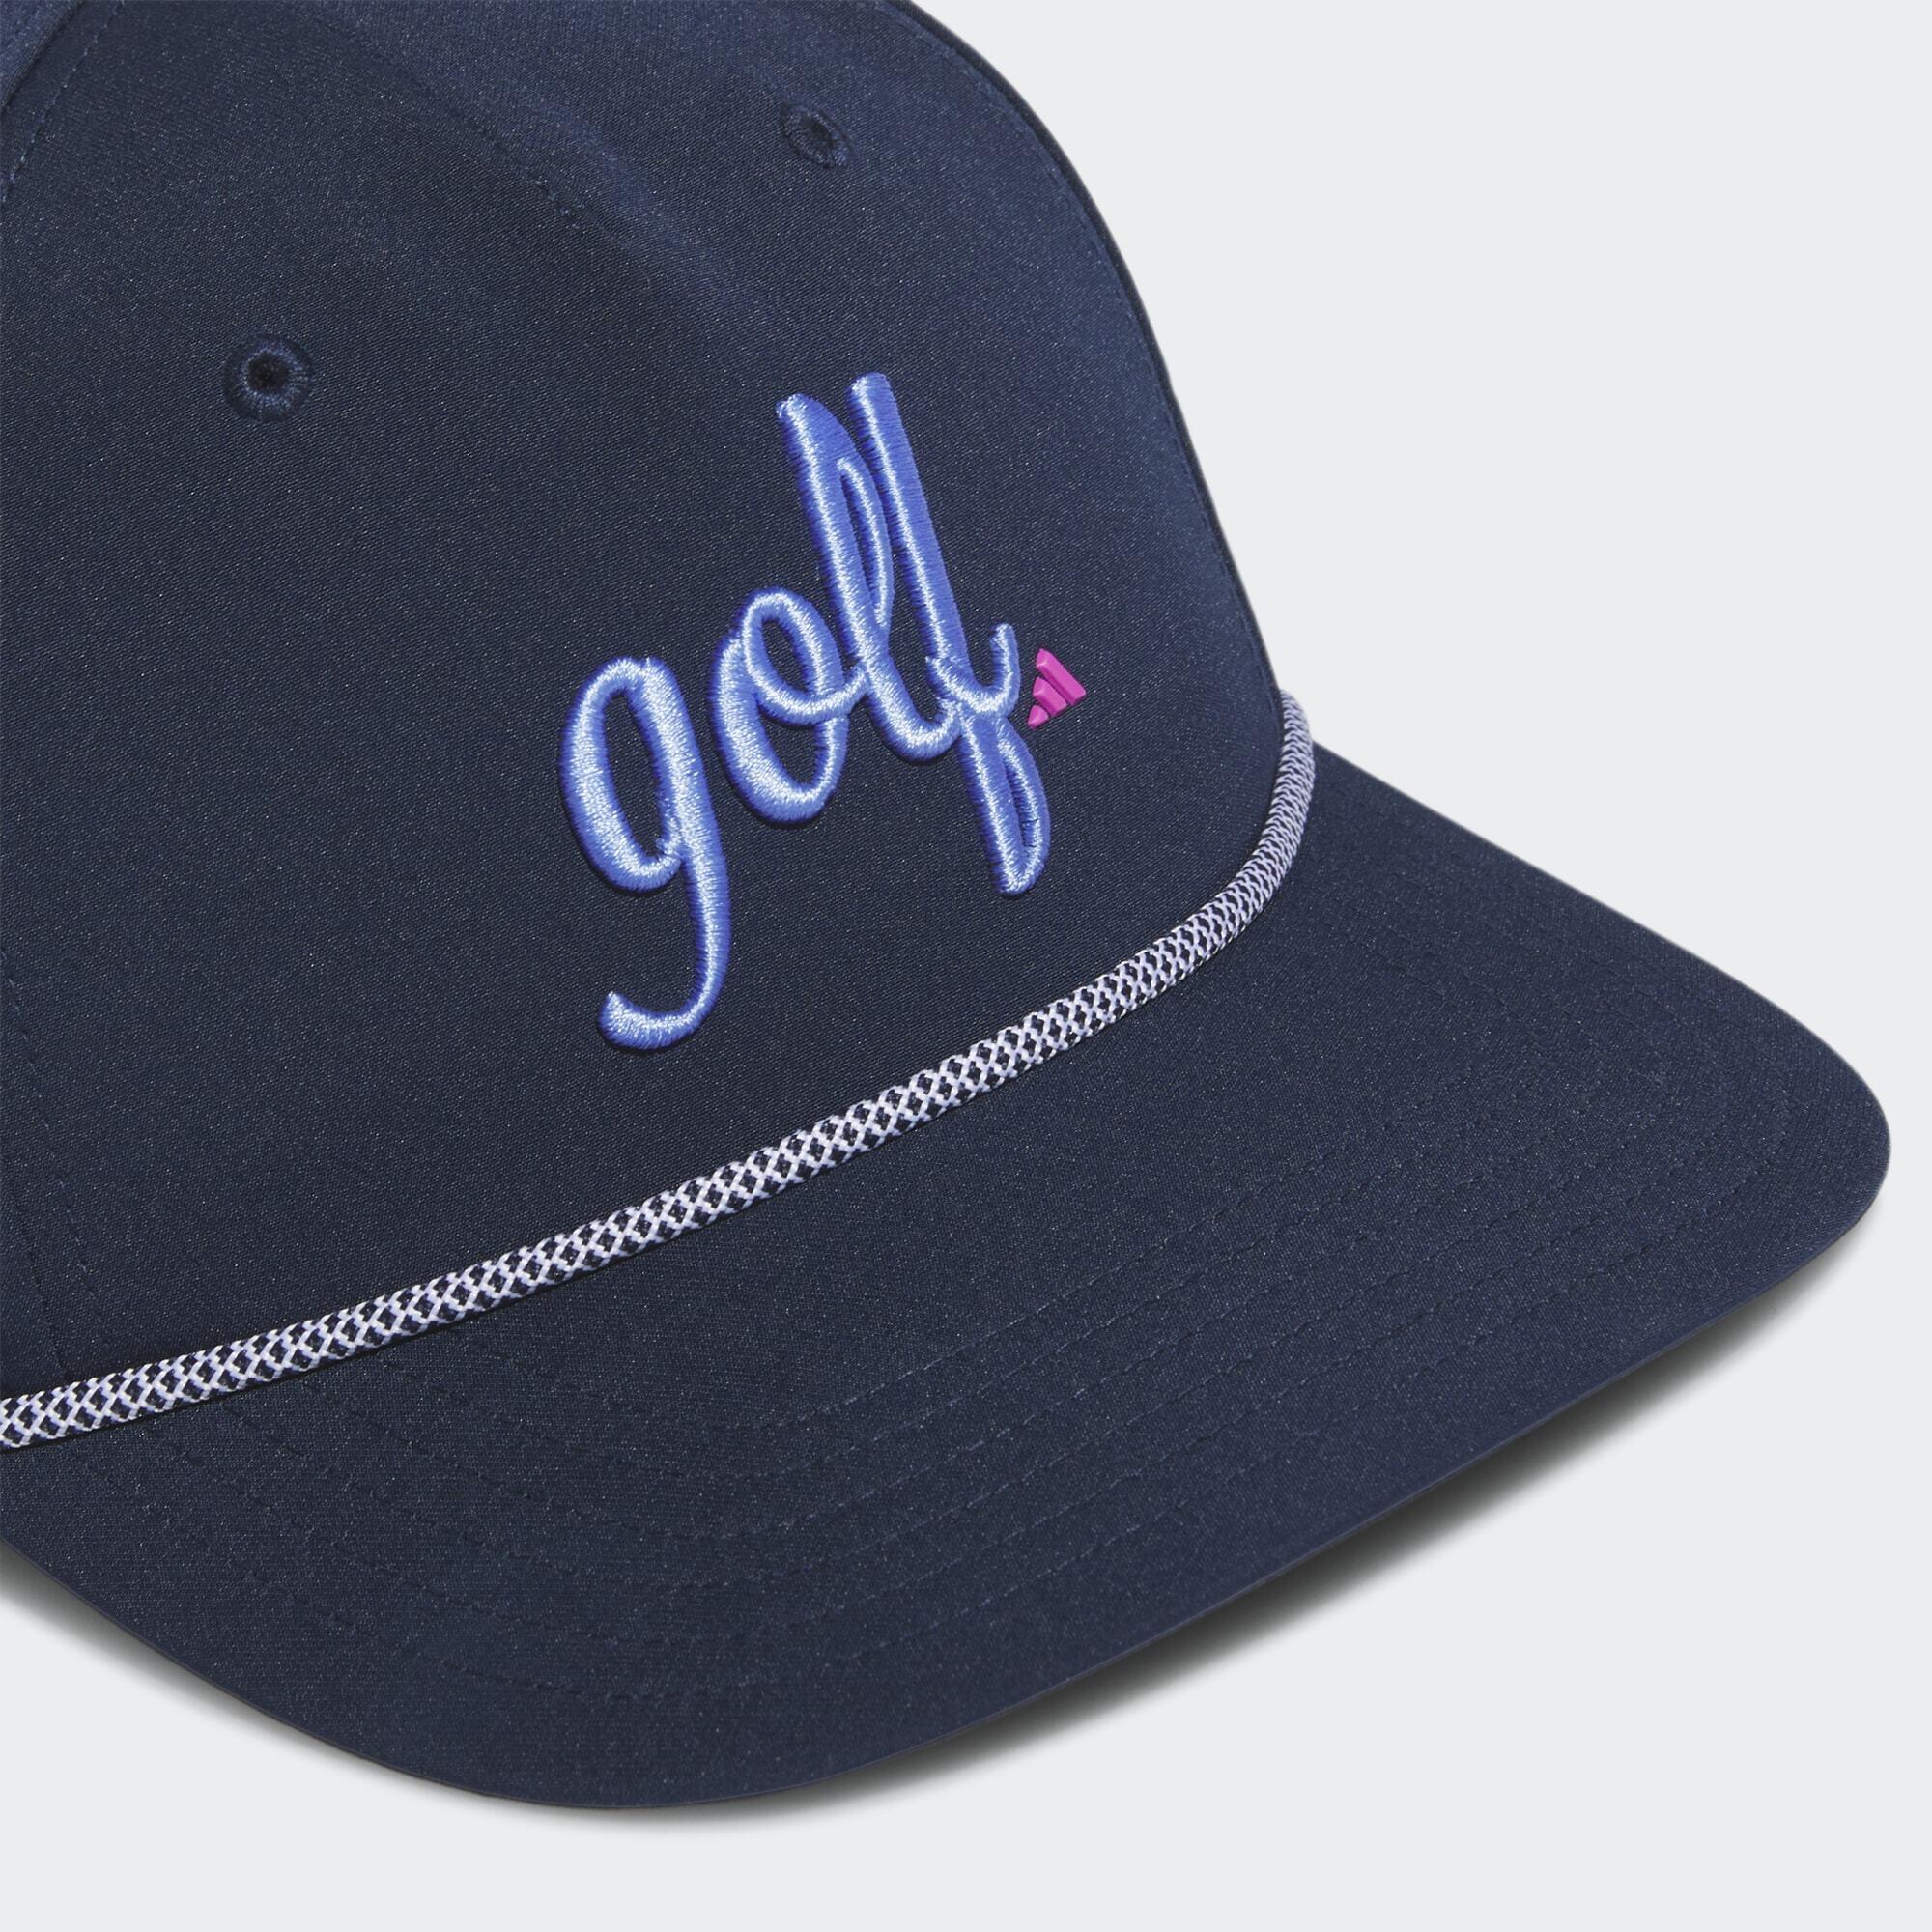 Five-Panel Golf Hat 4/6